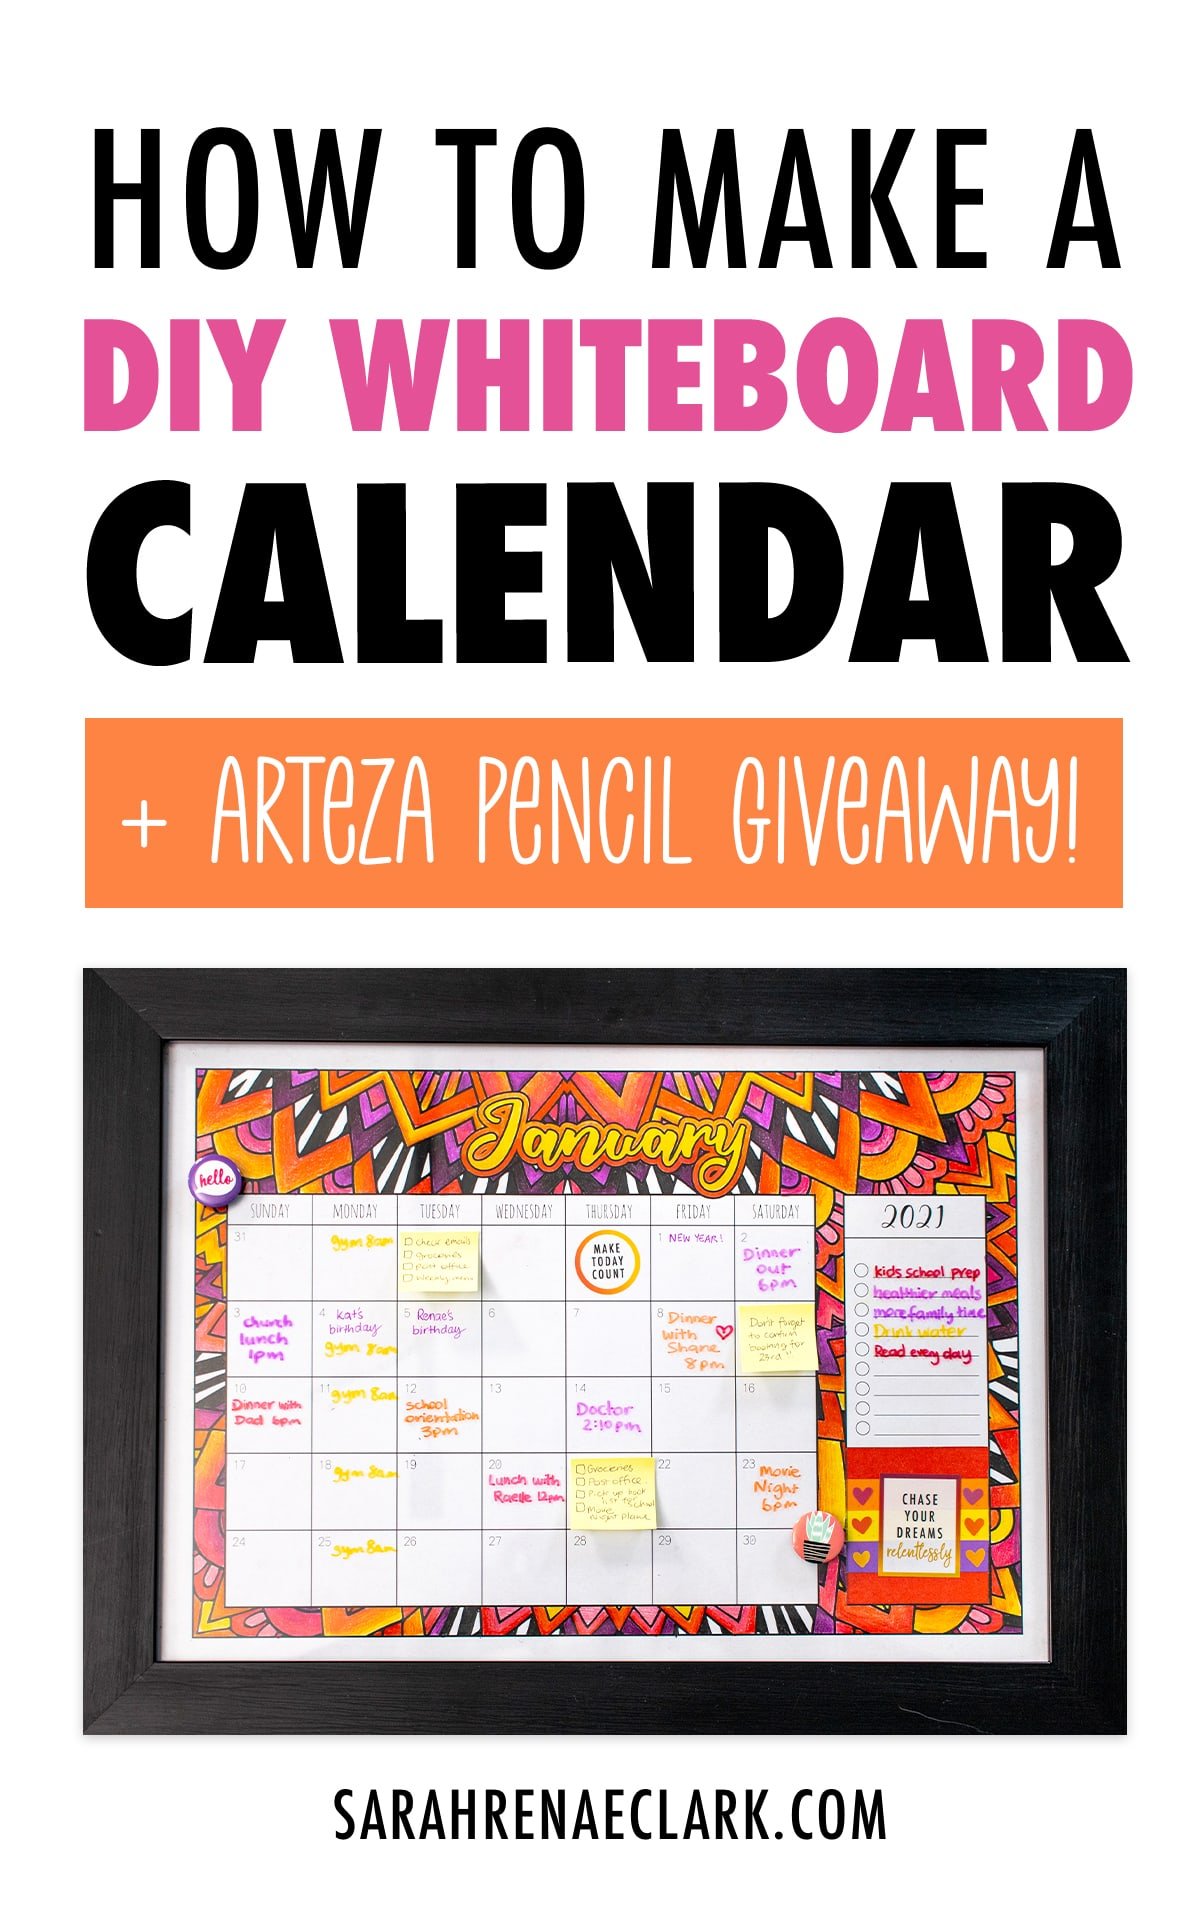 How to Make a DIY Whiteboard Calendar